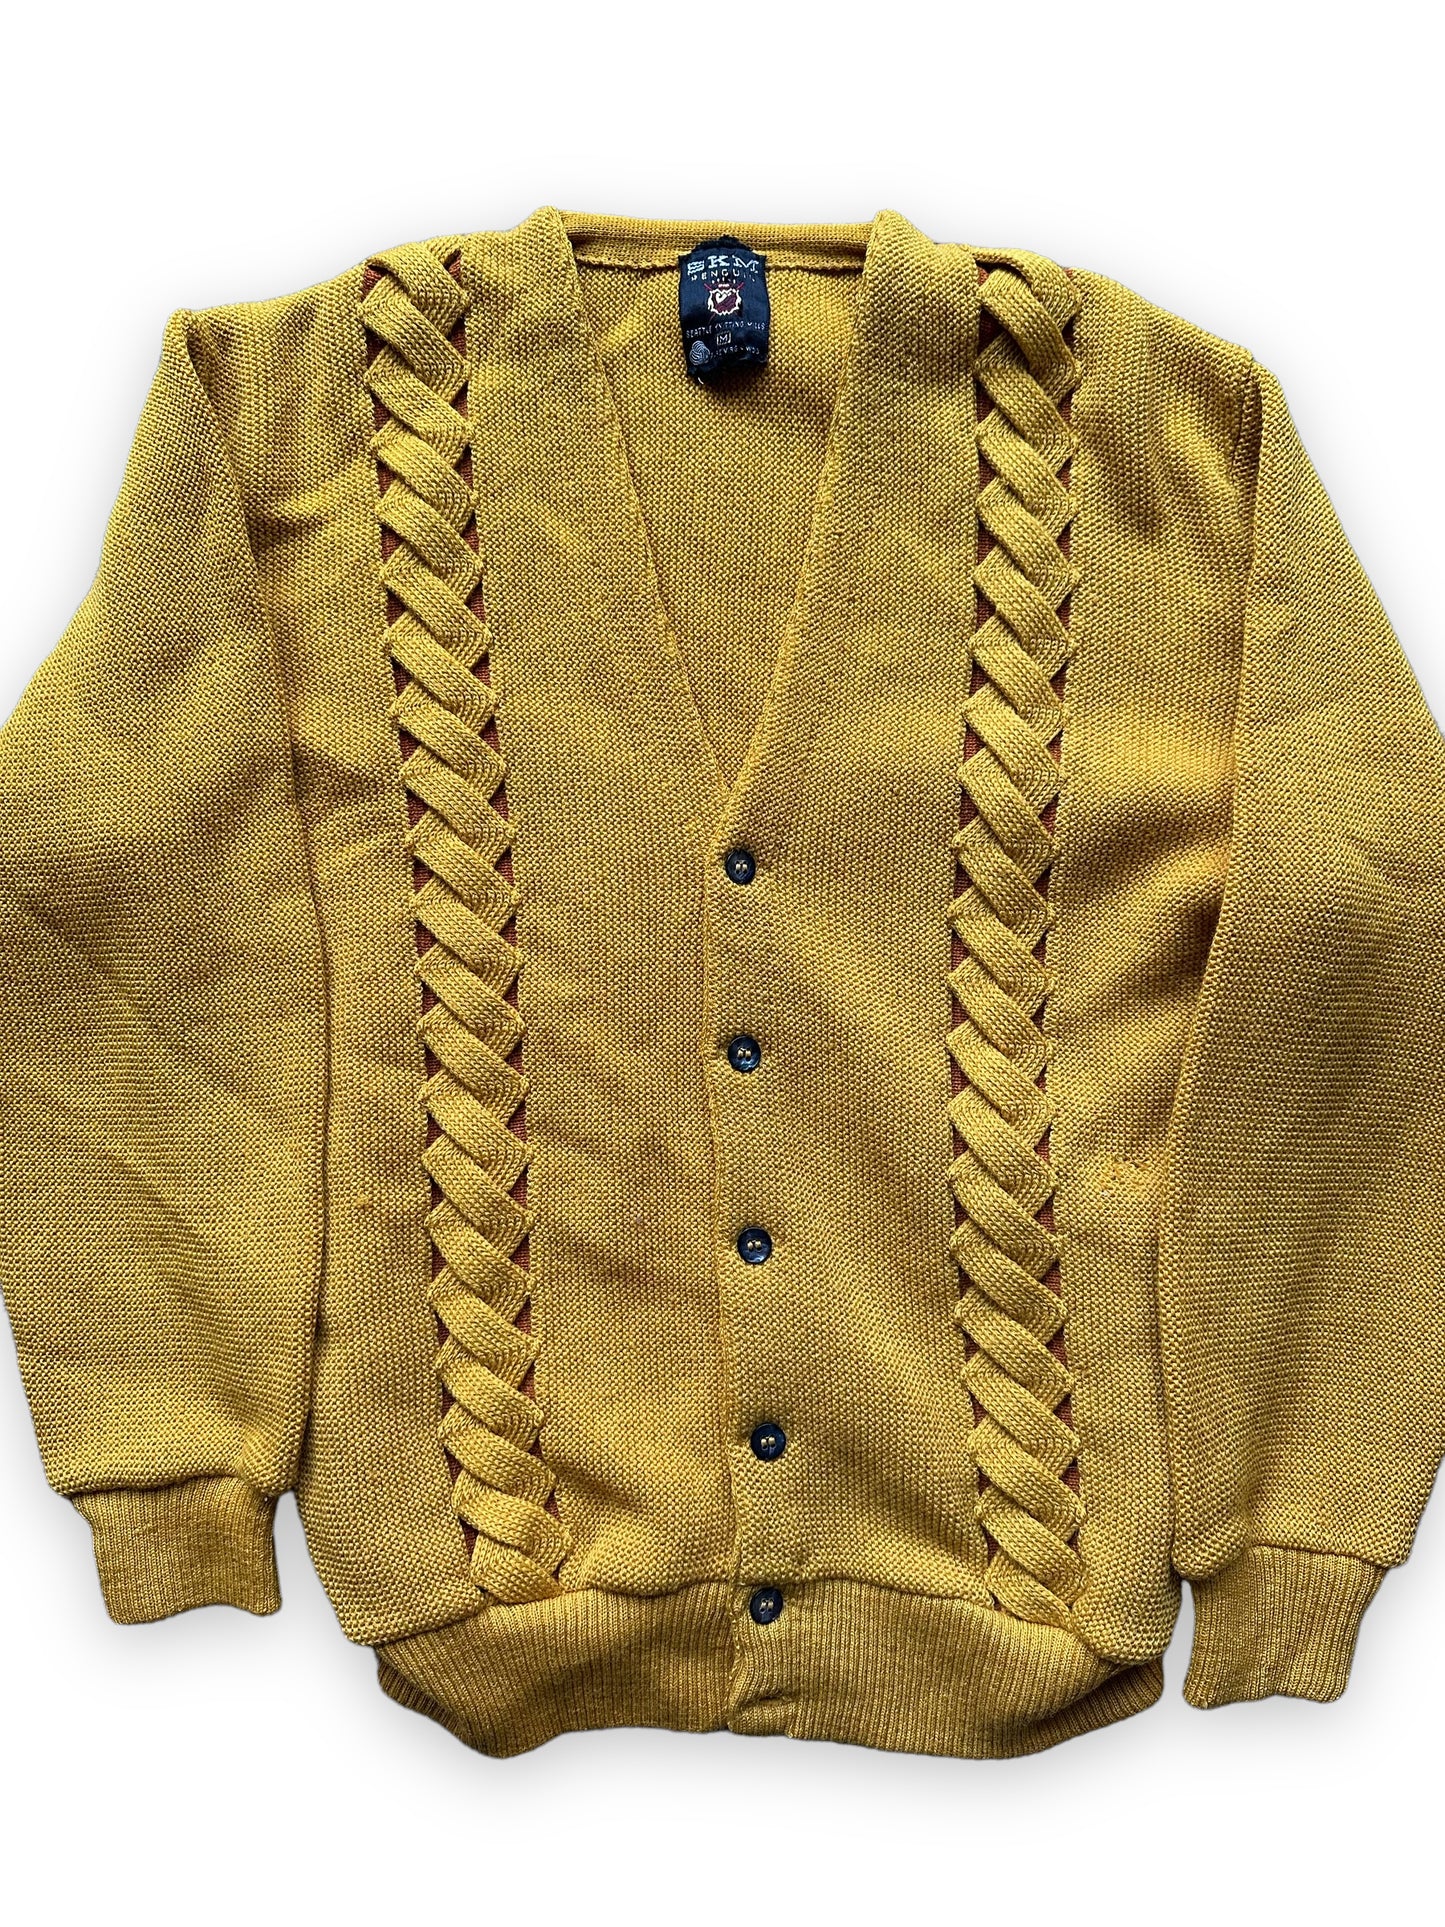 Front Flat Detail on Vintage Seattle Knitting Mills Golden Double Helix Wool Sweater SZ M |  Vintage Cardigan Sweaters Seattle | Barn Owl Vintage Seattle